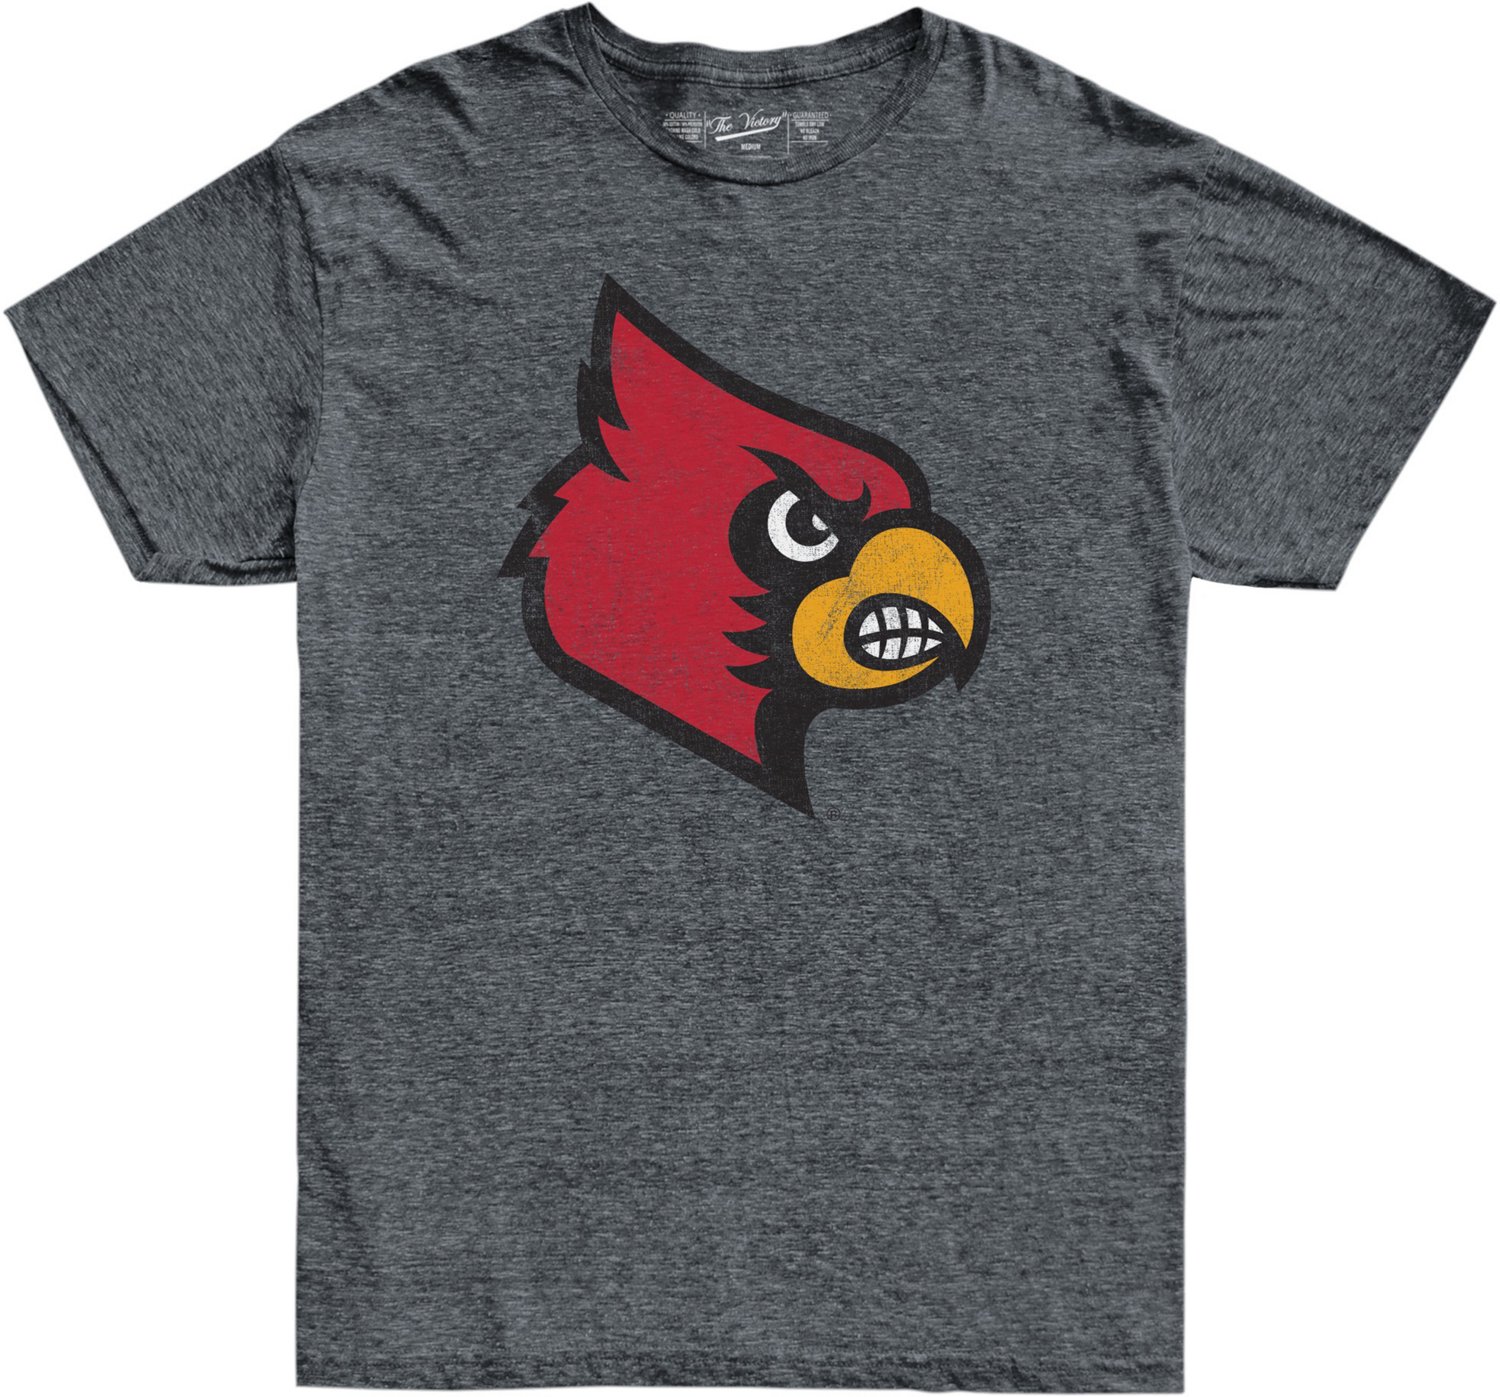 The Victory Men's University of Louisville Logo Short Sleeve T-shirt ...